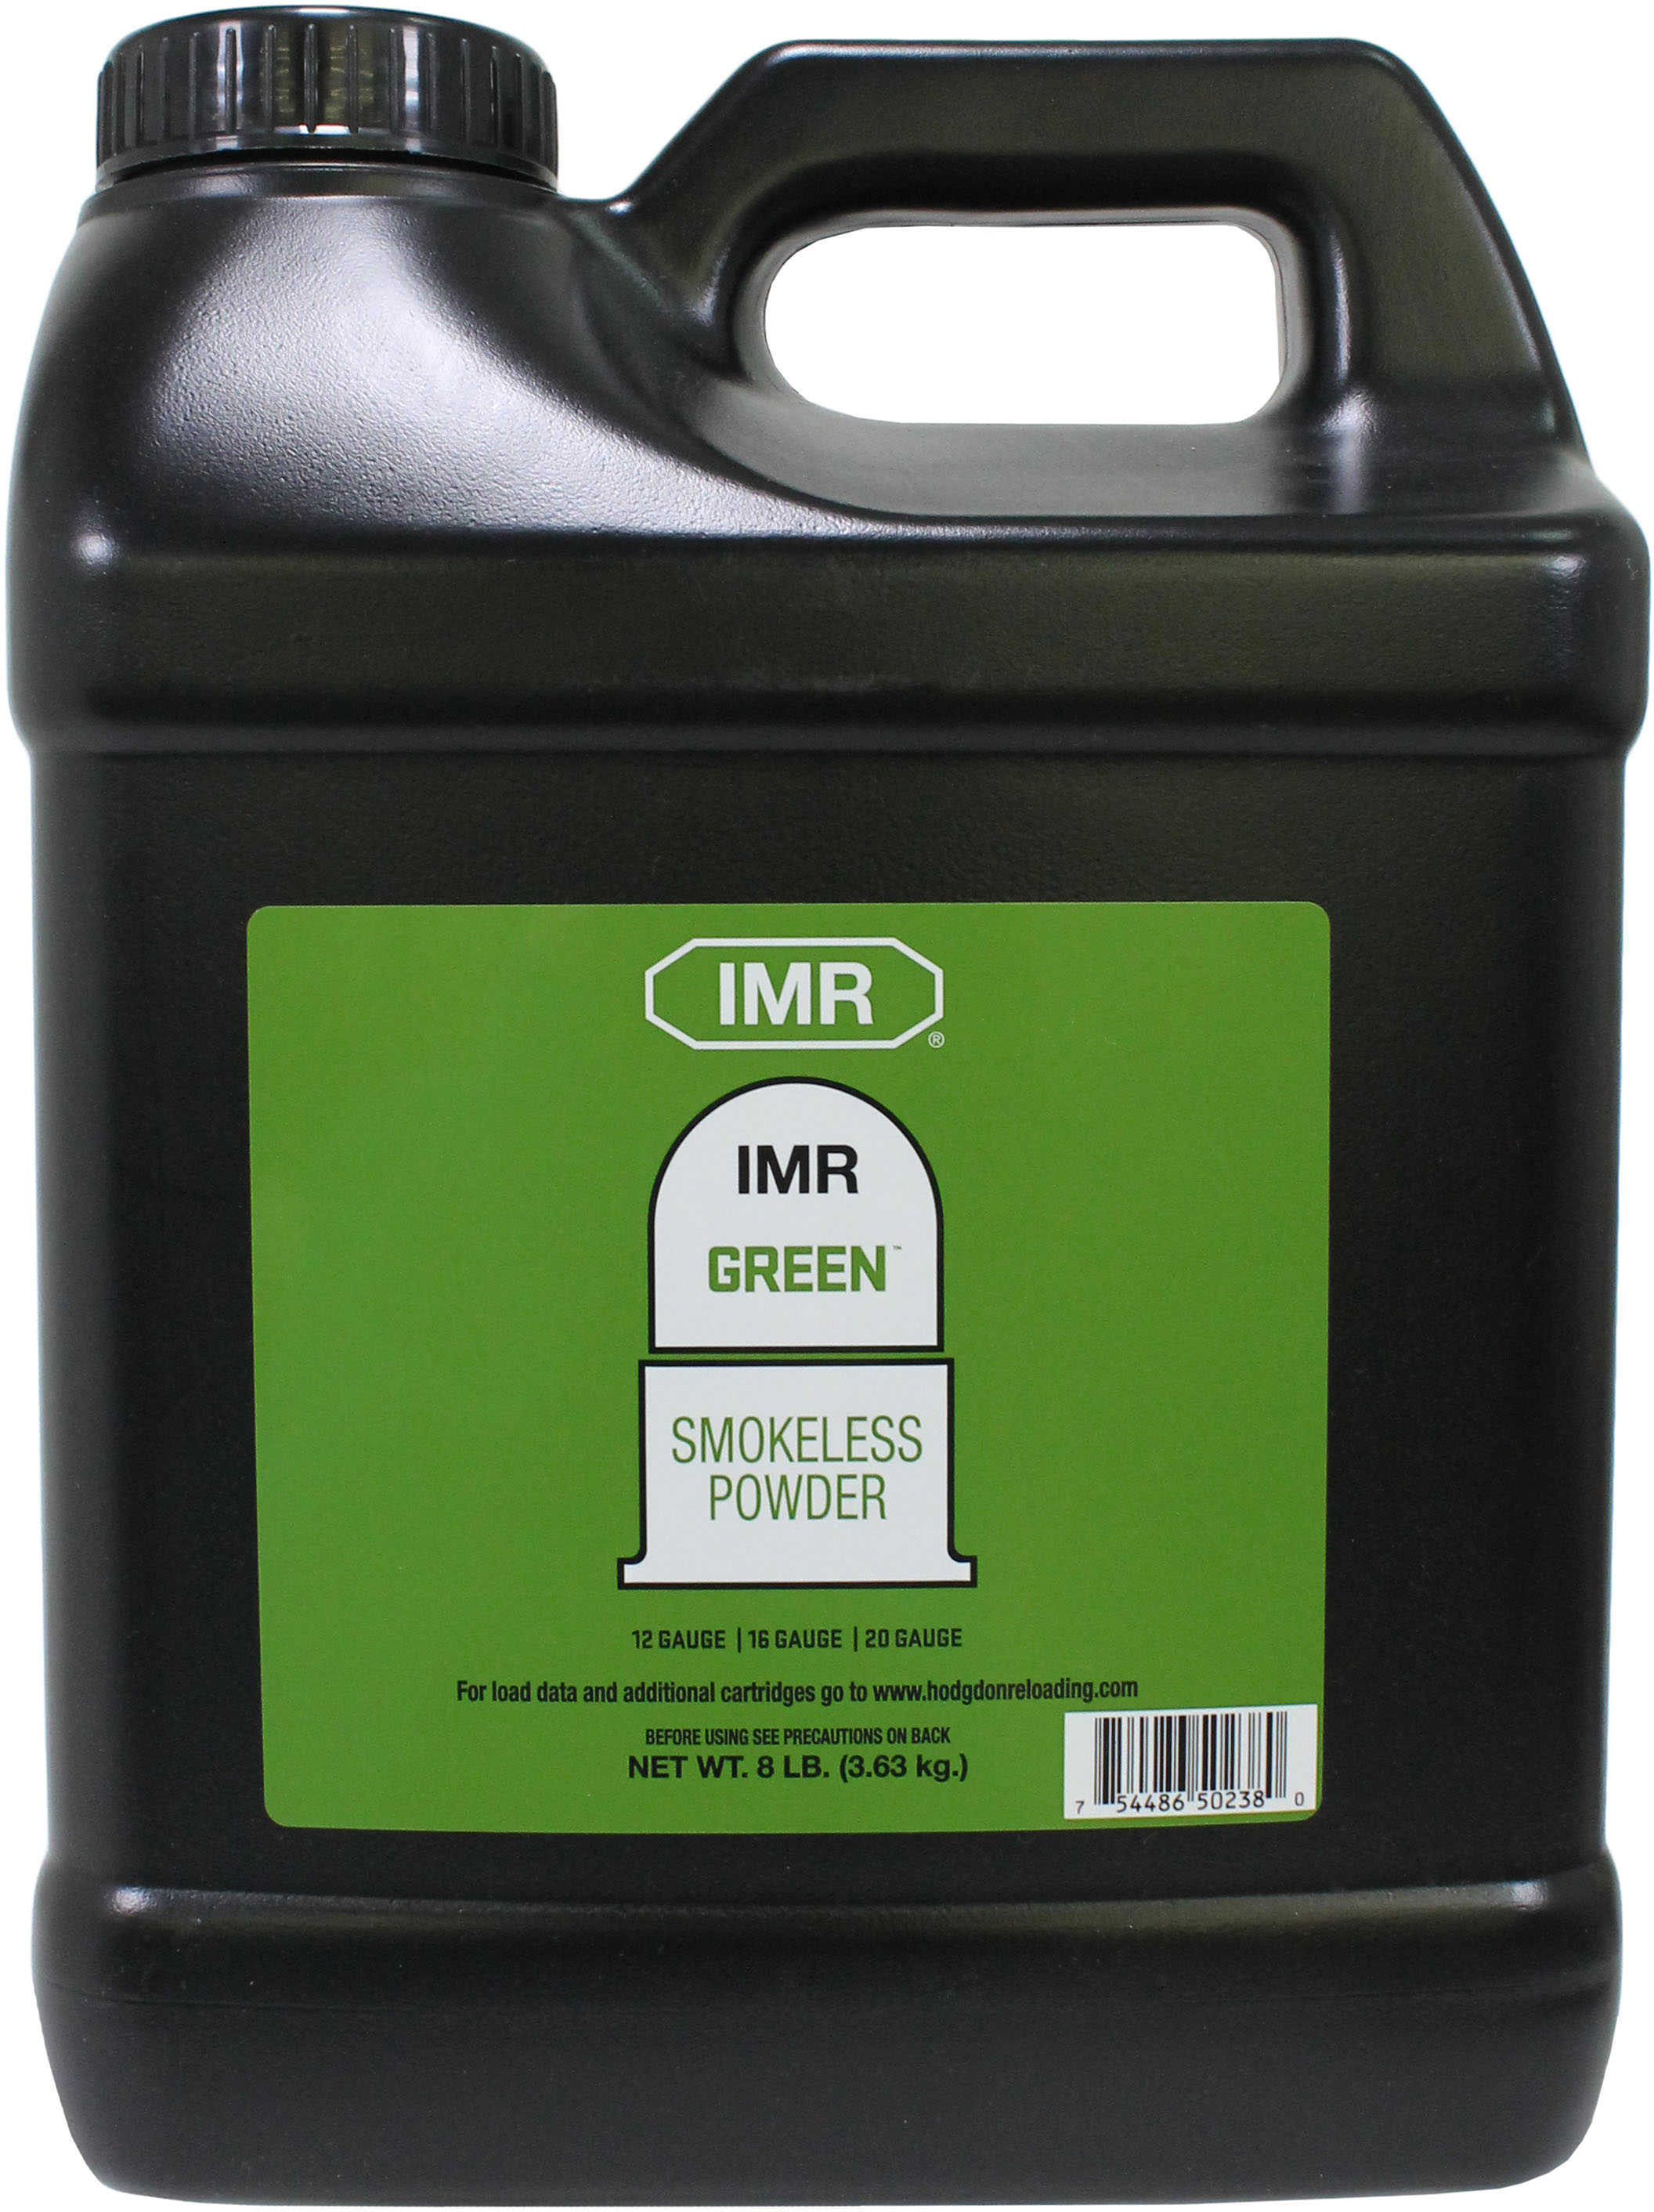 IMR Smokeless Powder Green 8Lb.